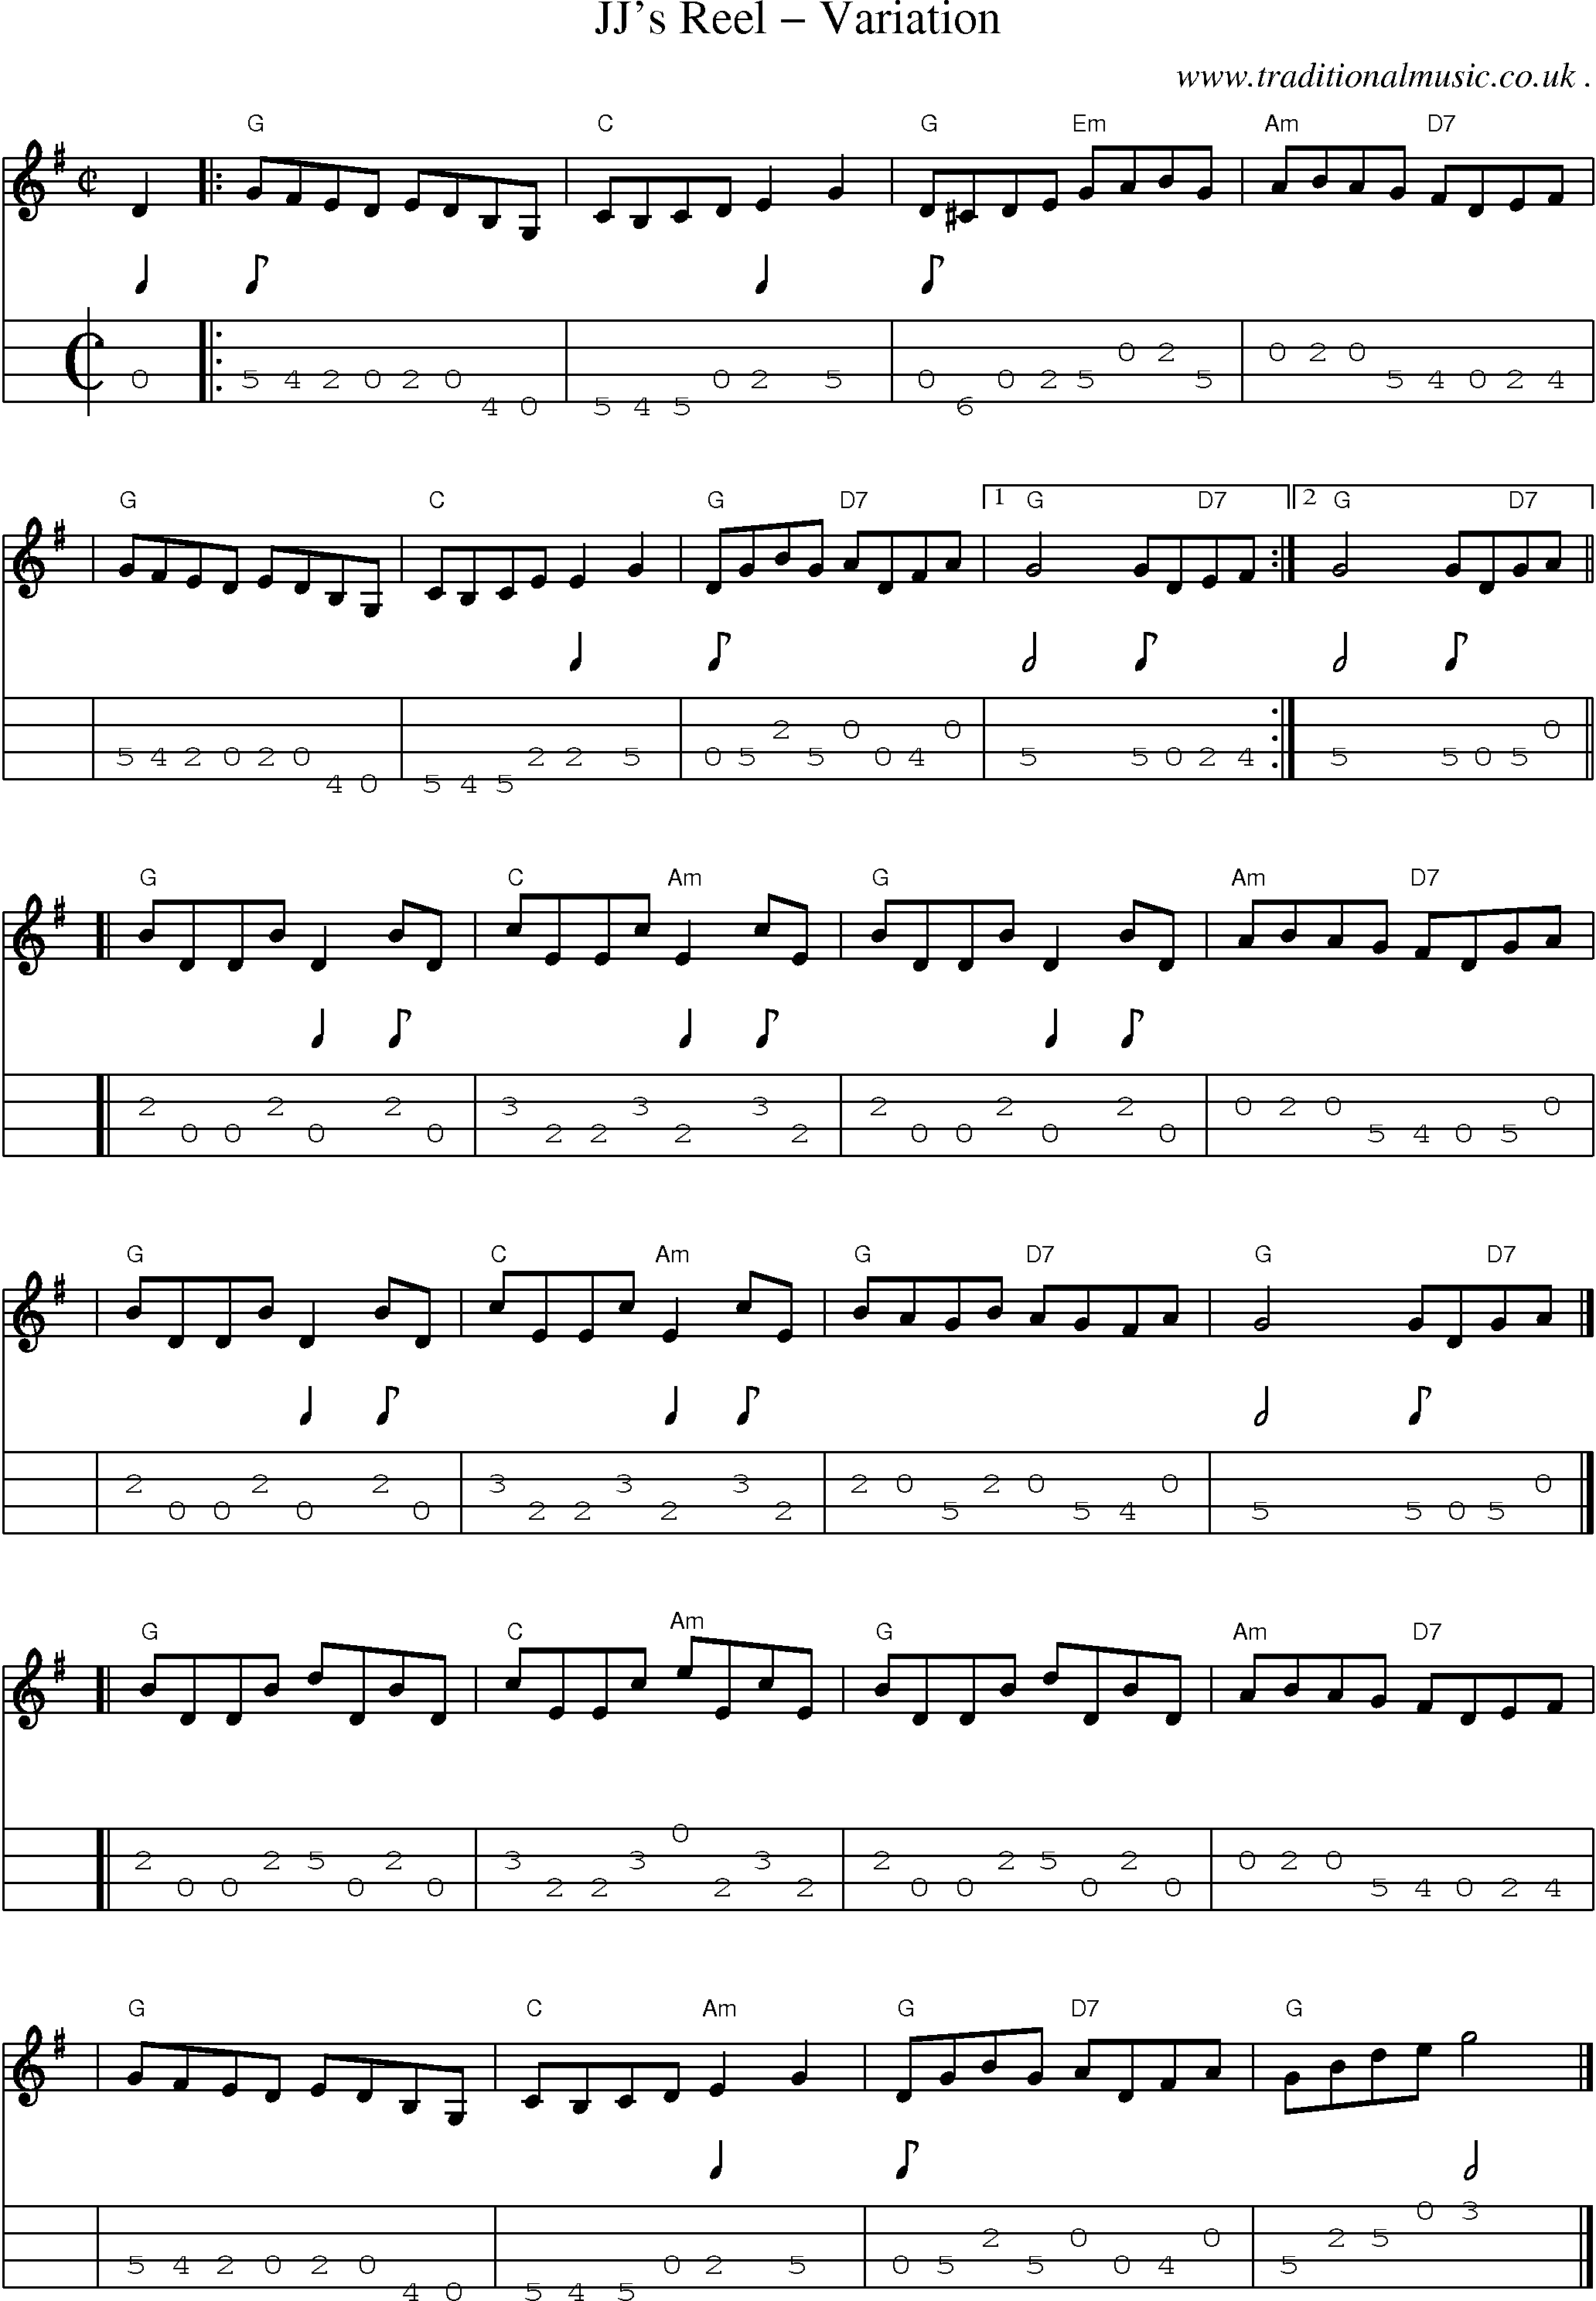 Sheet-music  score, Chords and Mandolin Tabs for Jjs Reel Variation